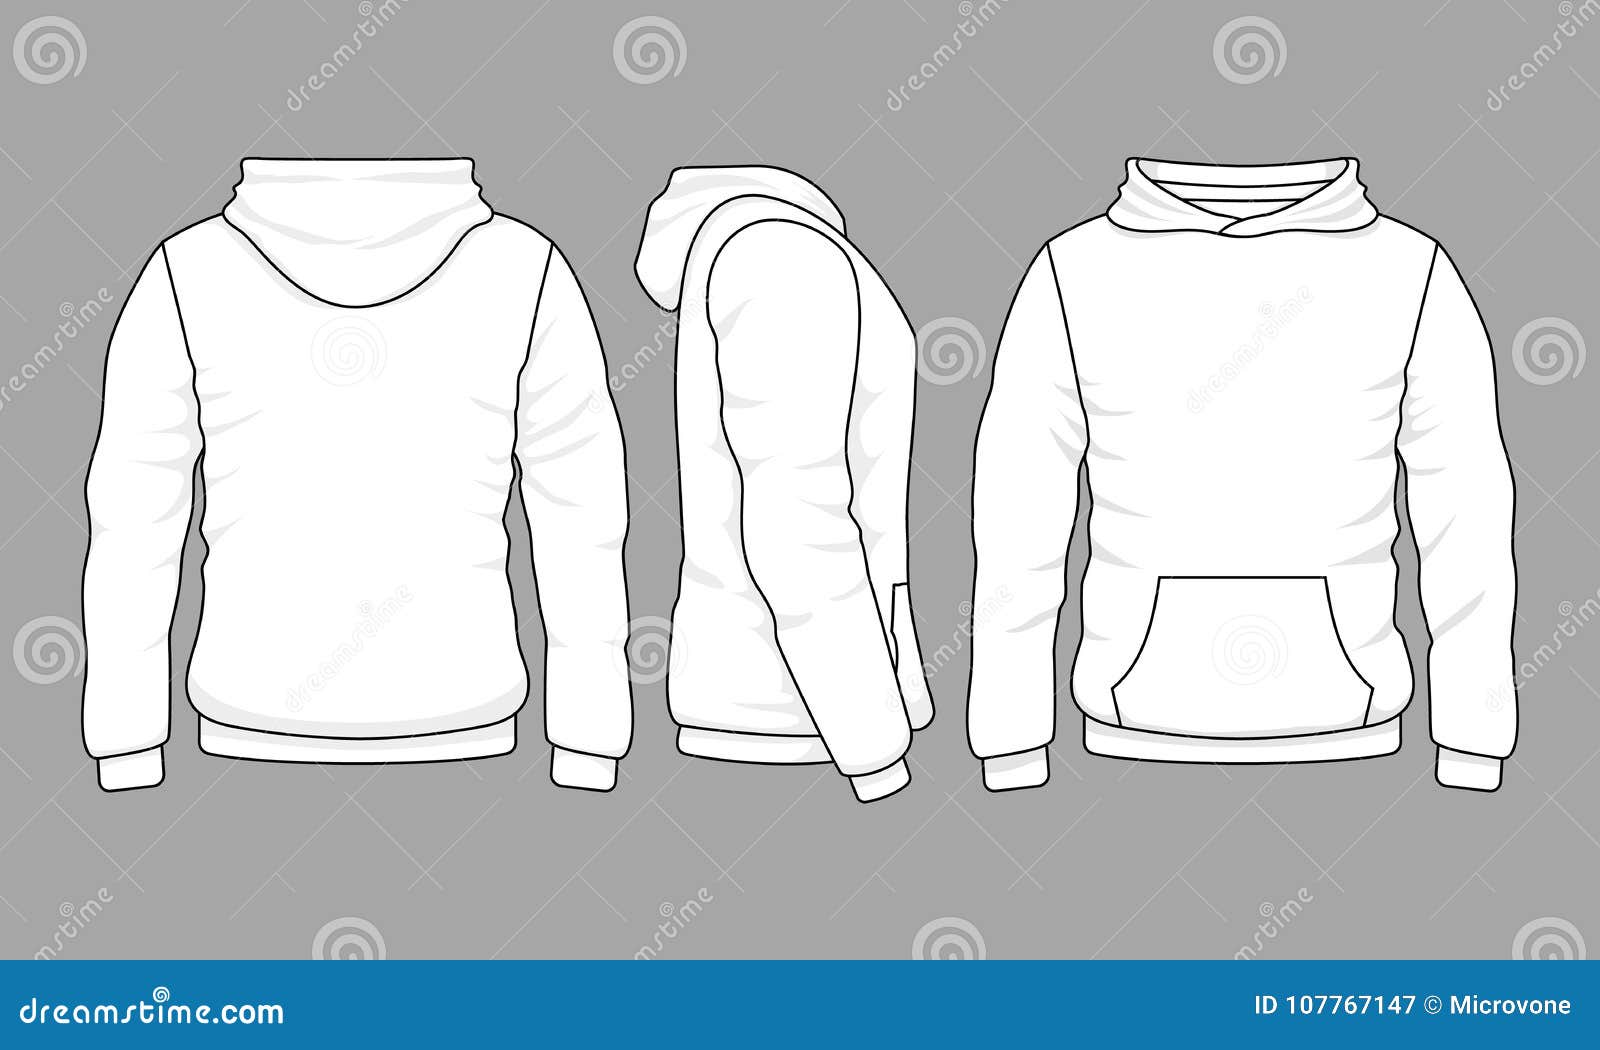 male hoodie sweatshirt in front, back and side views